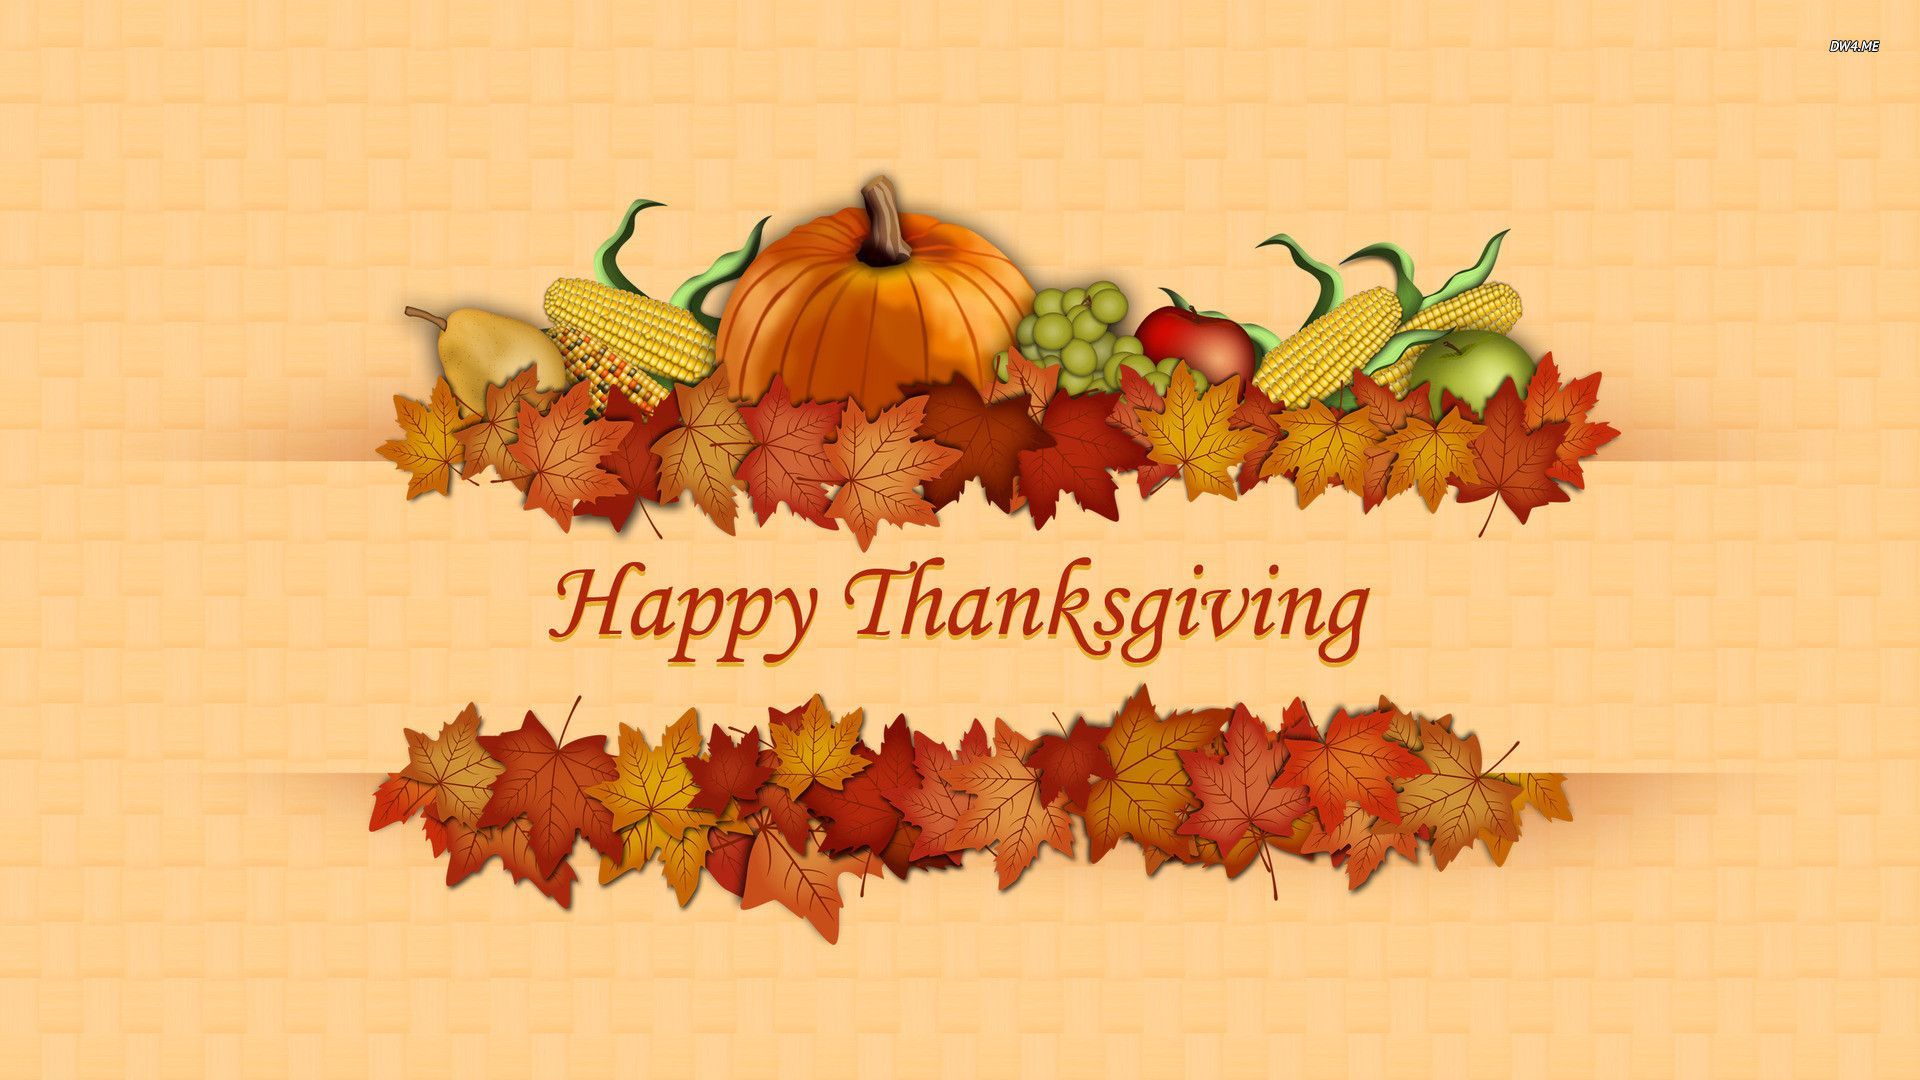 Free Thanksgiving Wallpaper for iPad iPad 2: Giving Thanks. Epic Car Wal. Happy thanksgiving wallpaper, Thanksgiving picture, Happy thanksgiving day